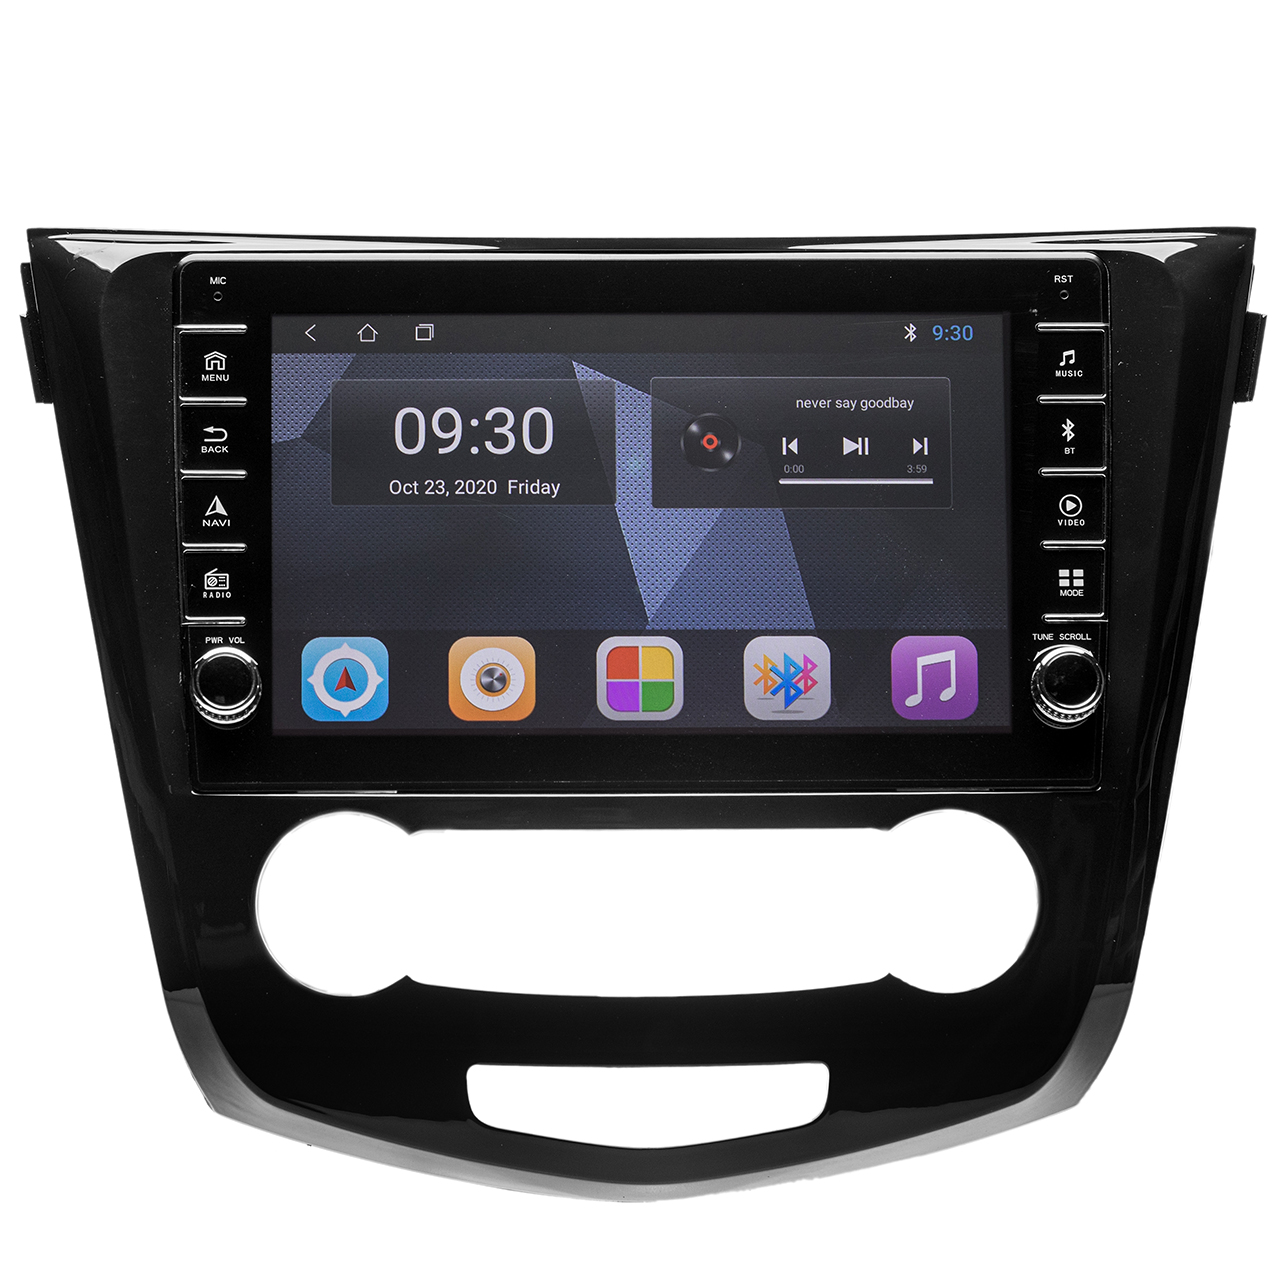 Navigatie AUTONAV ECO Android GPS Dedicata Nissan Qashqai si X-Trail Dupa 2013, Model PRO 16GB Stocare, 1GB DDR3 RAM, Display 9